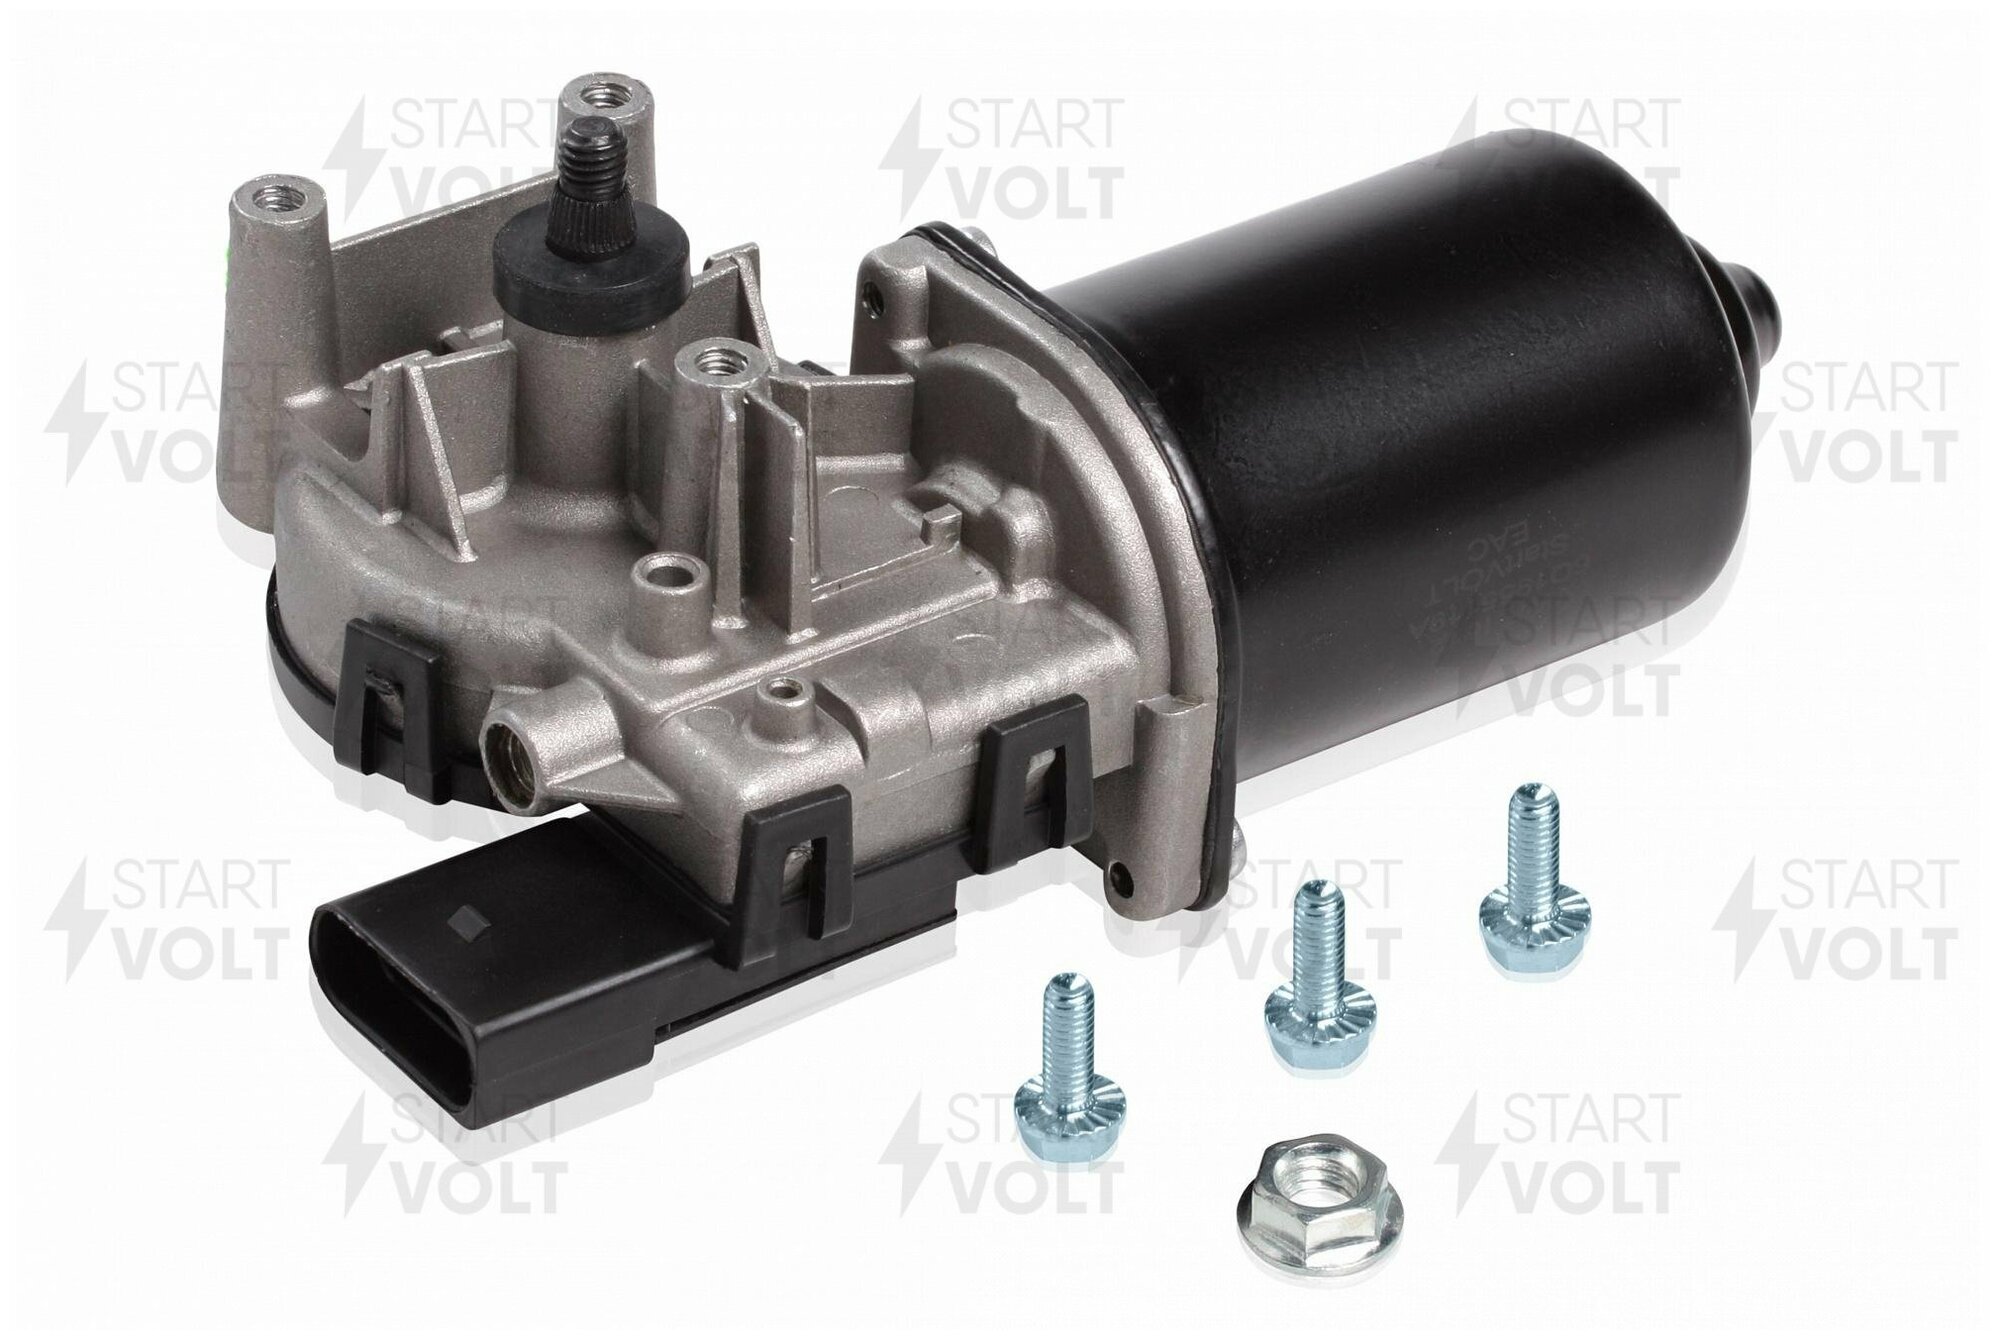 Моторедуктор стеклоочистителя для автомобилей VAG Fabia (99-)/Polo (01-) (передний) VWF 1812 StartVolt